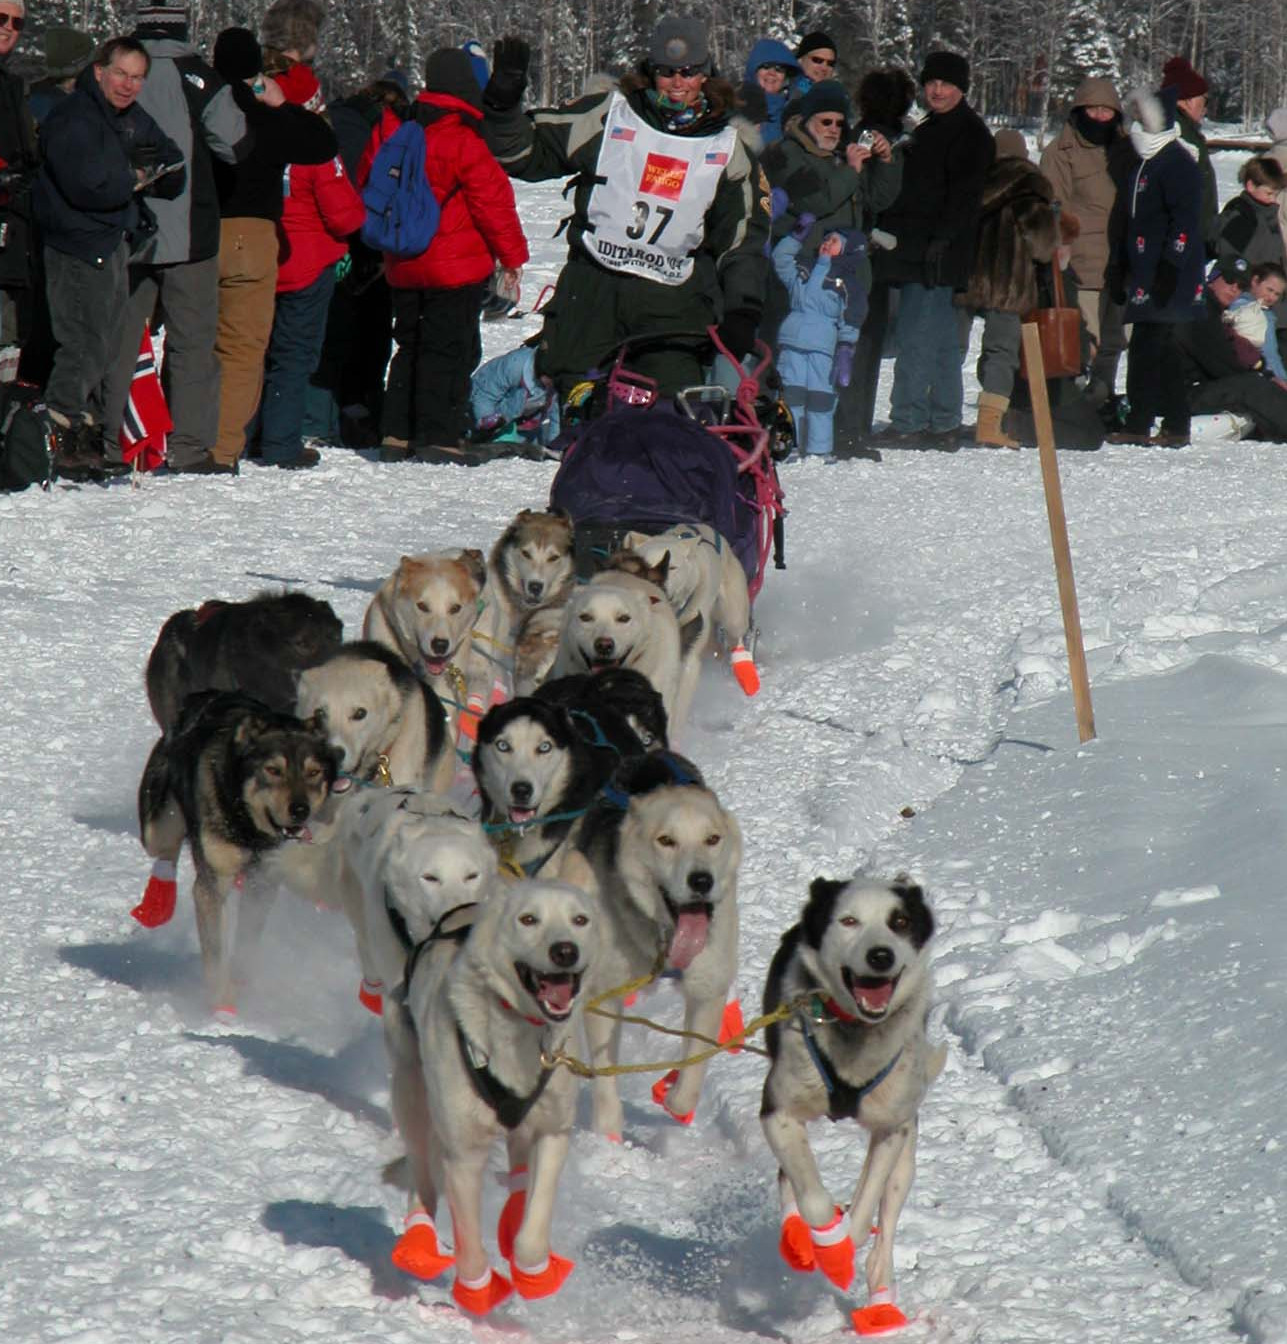 Iditarod racer and dog team